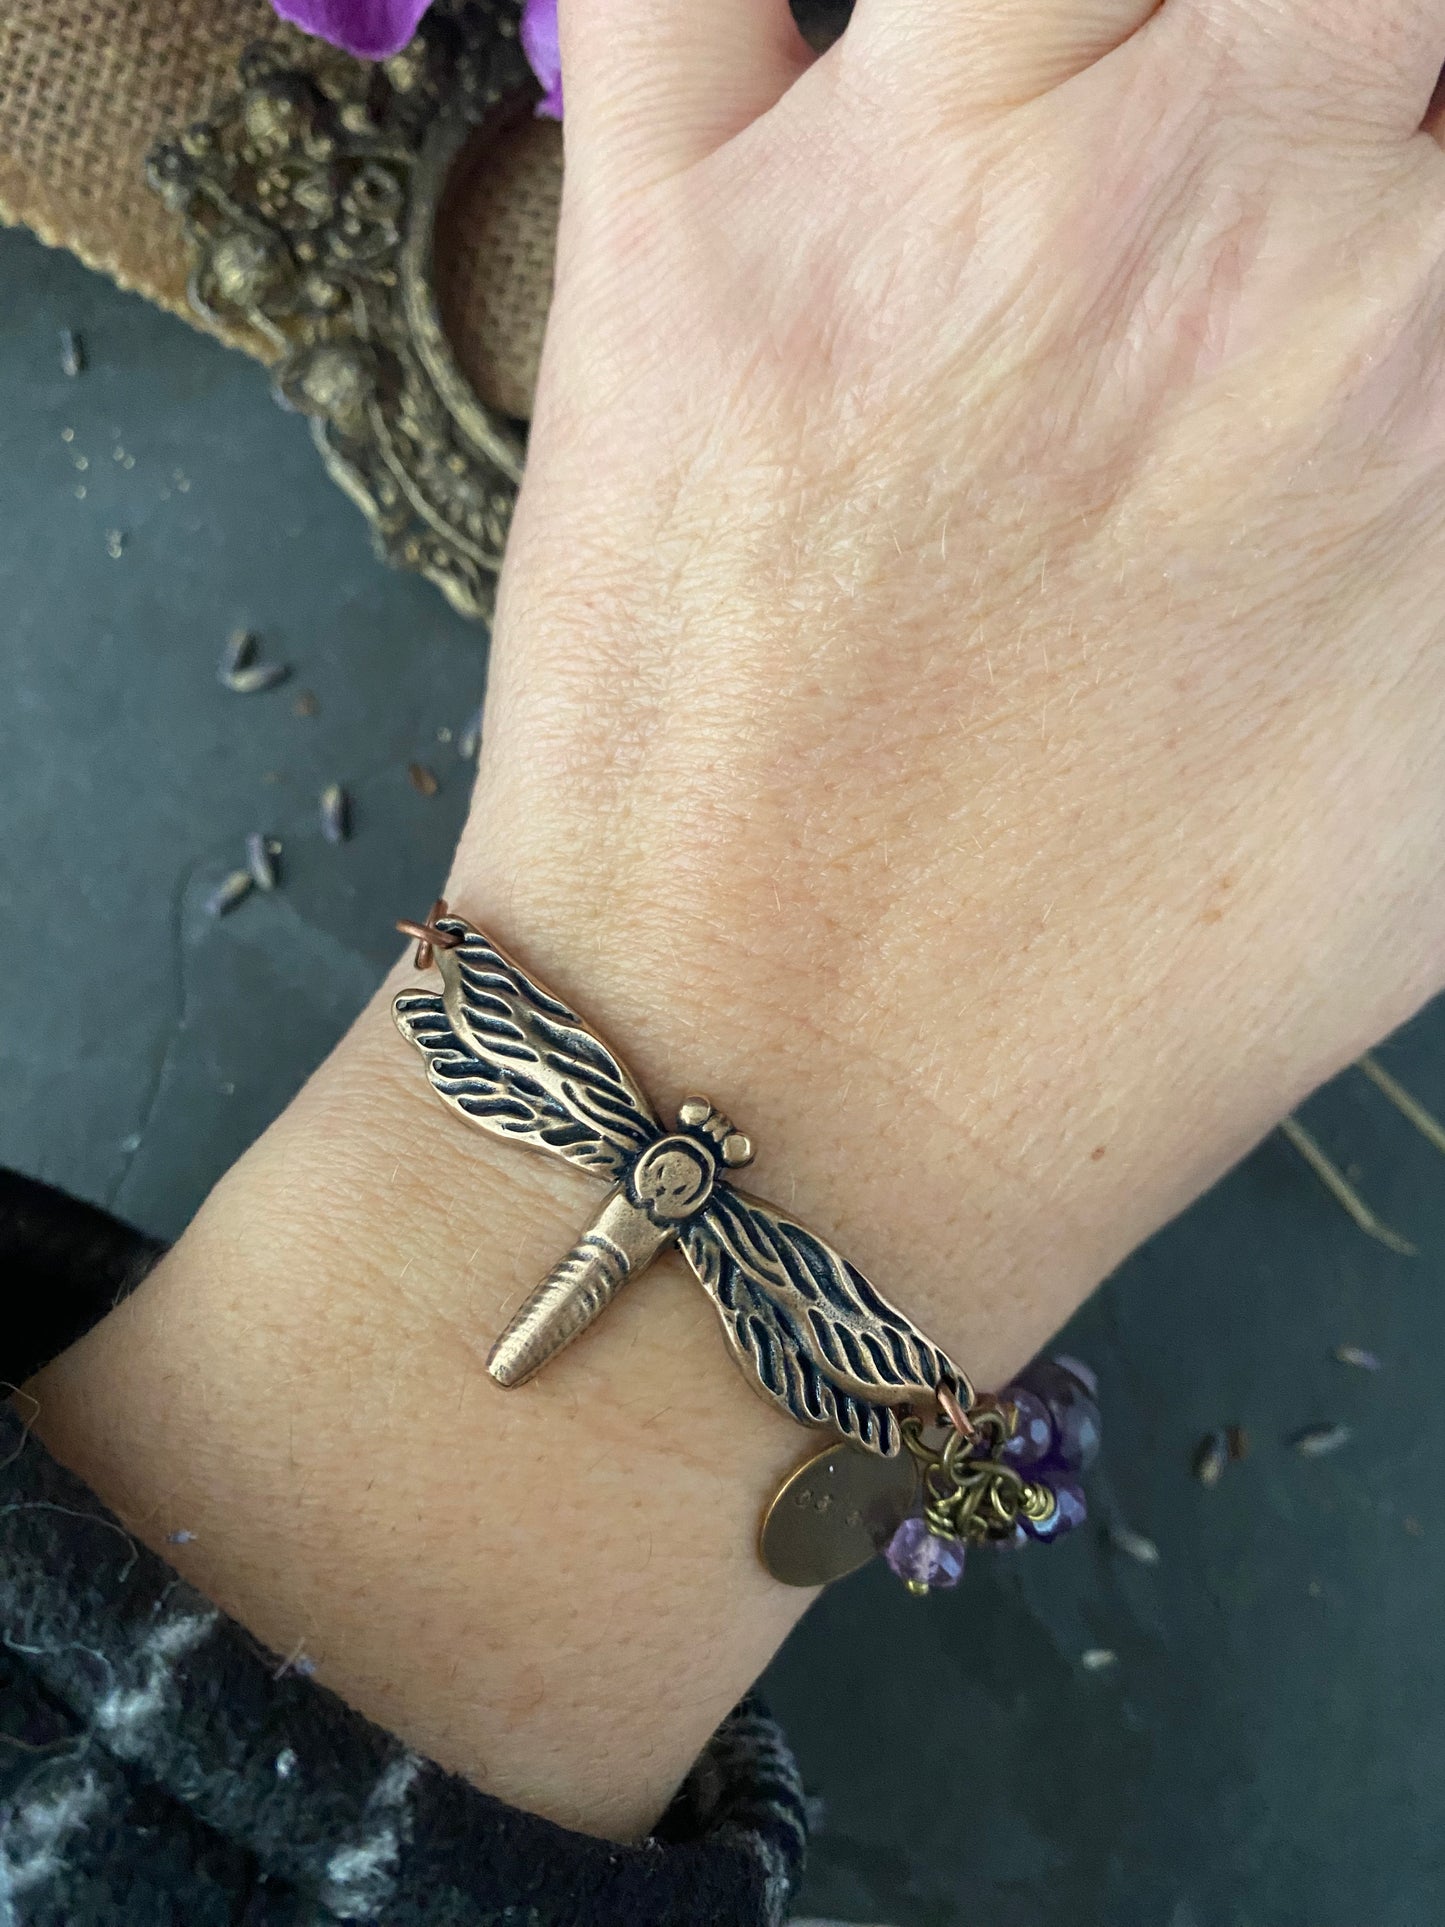 Bronze dragonfly cuff, amethyst stone, bronze metal bracelet.